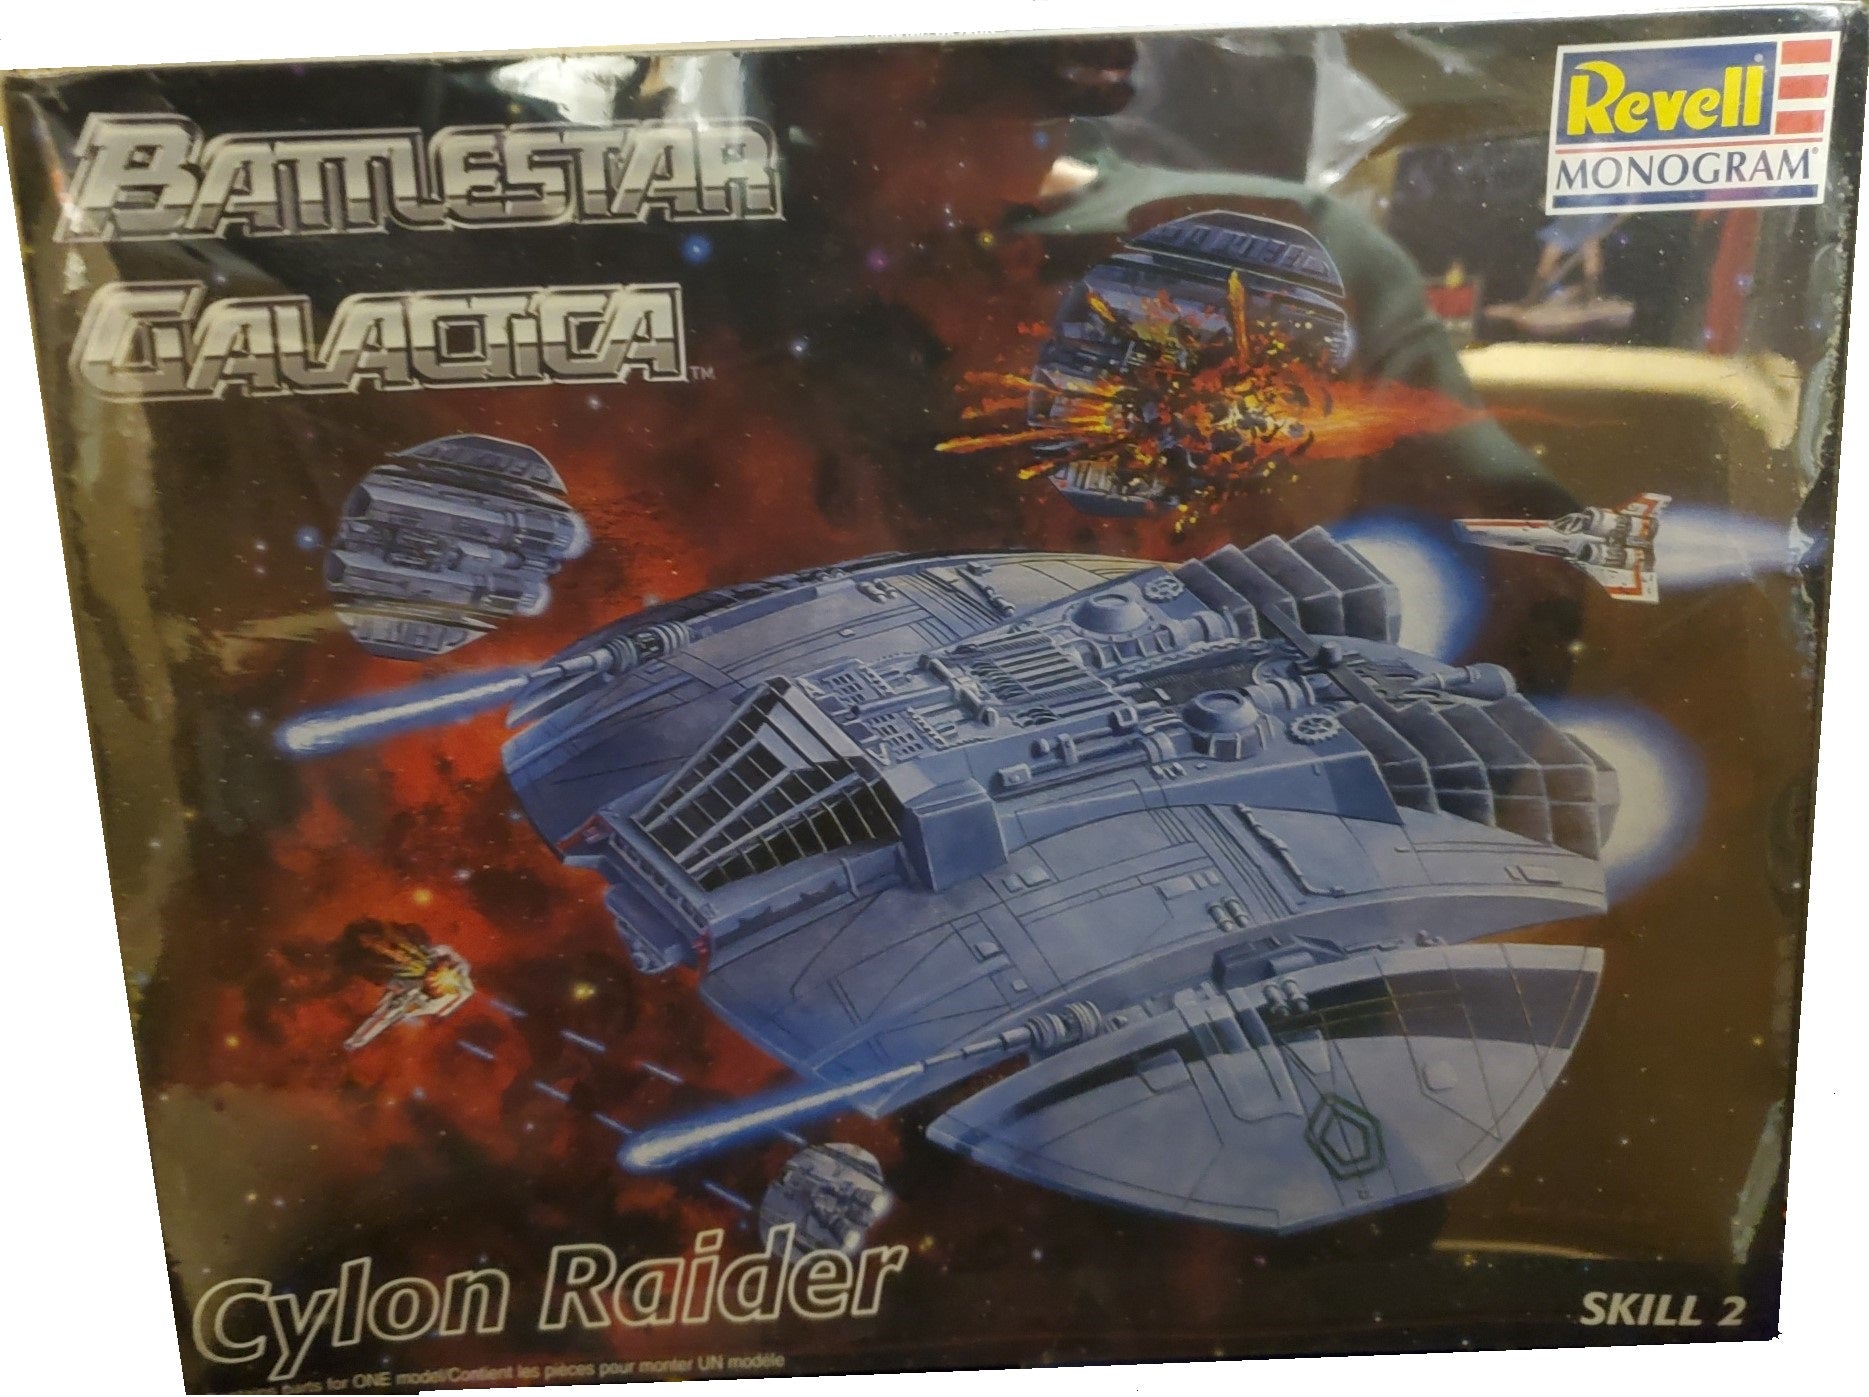 Battlestar Galactica CYLON RAIDER space craft model kit